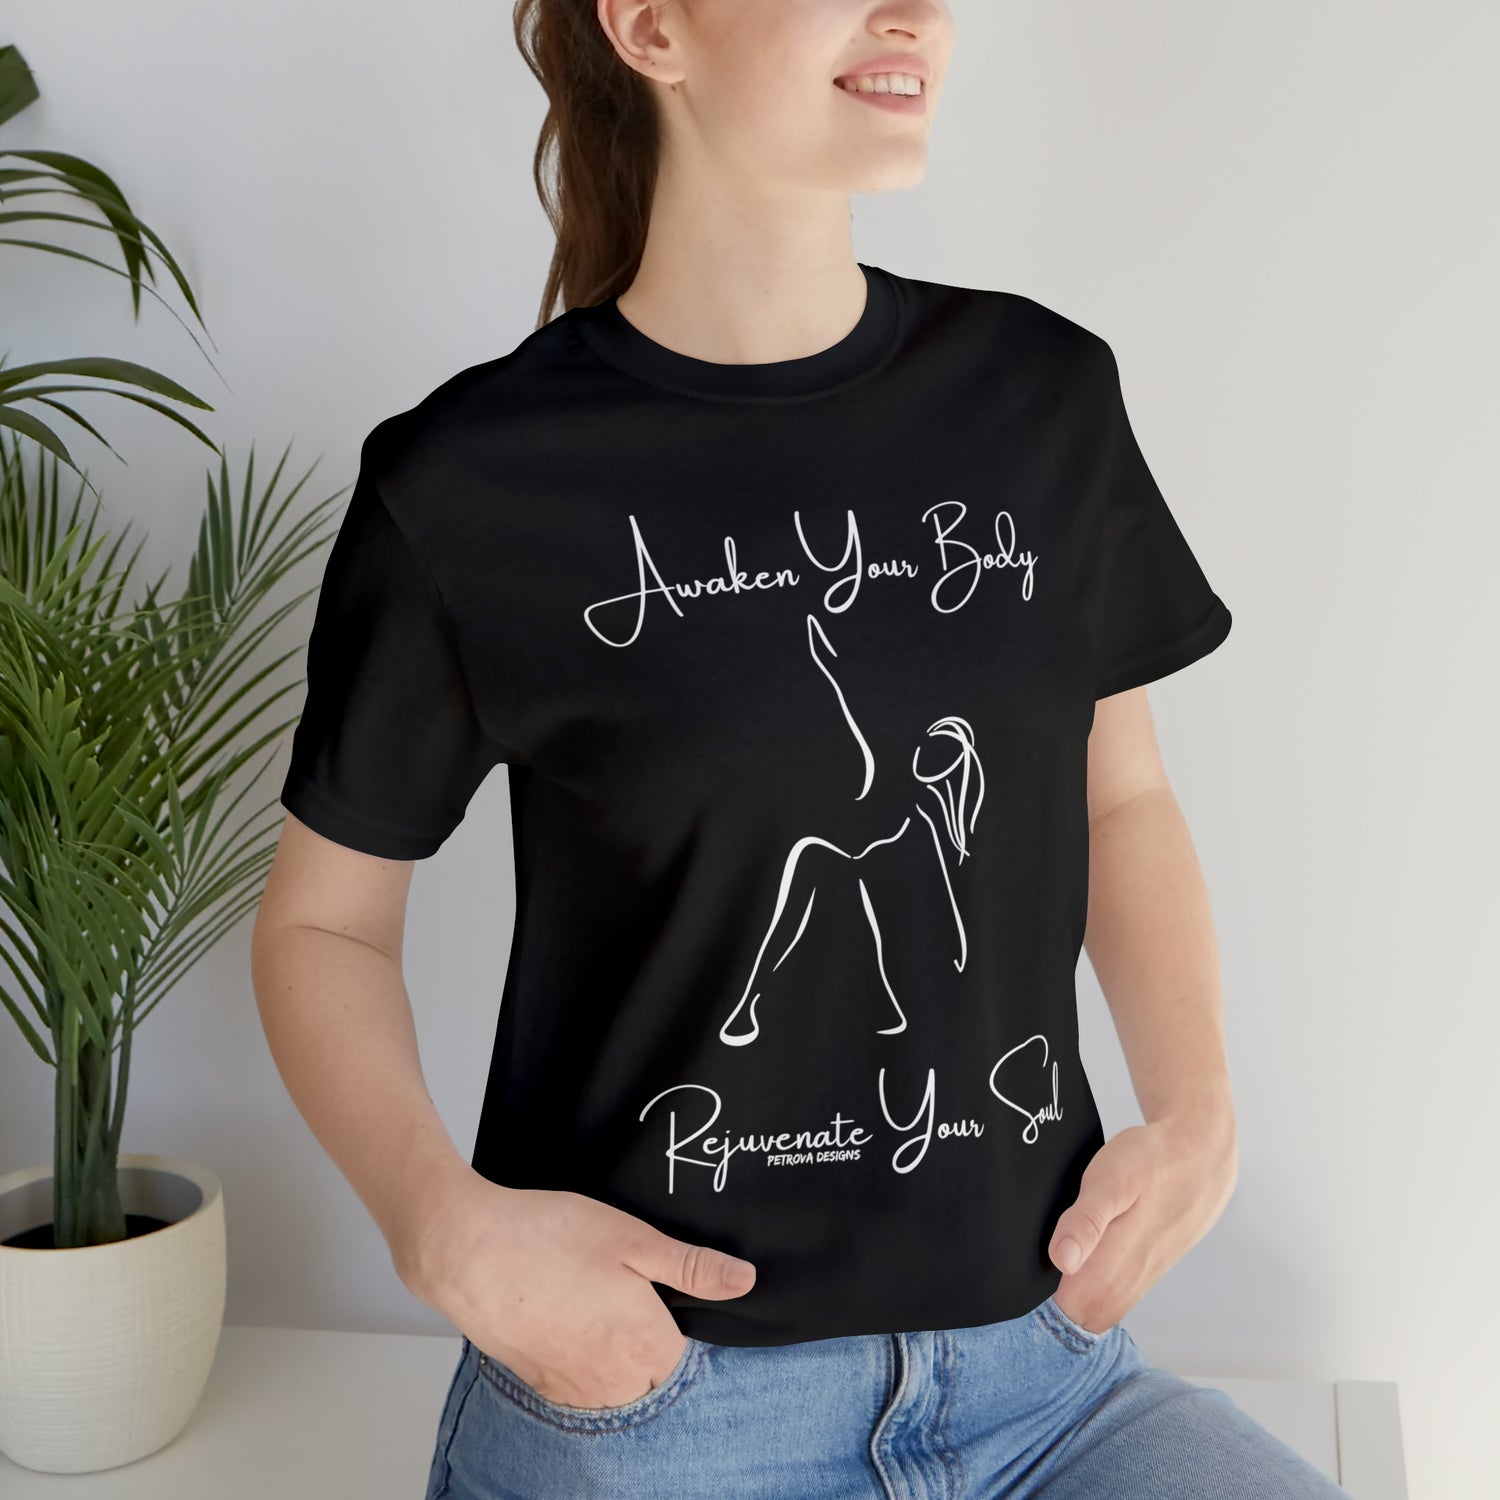 Black T-Shirt Tshirt Design Gift for Friend and Family Short Sleeved Shirt Yoga Petrova Designs